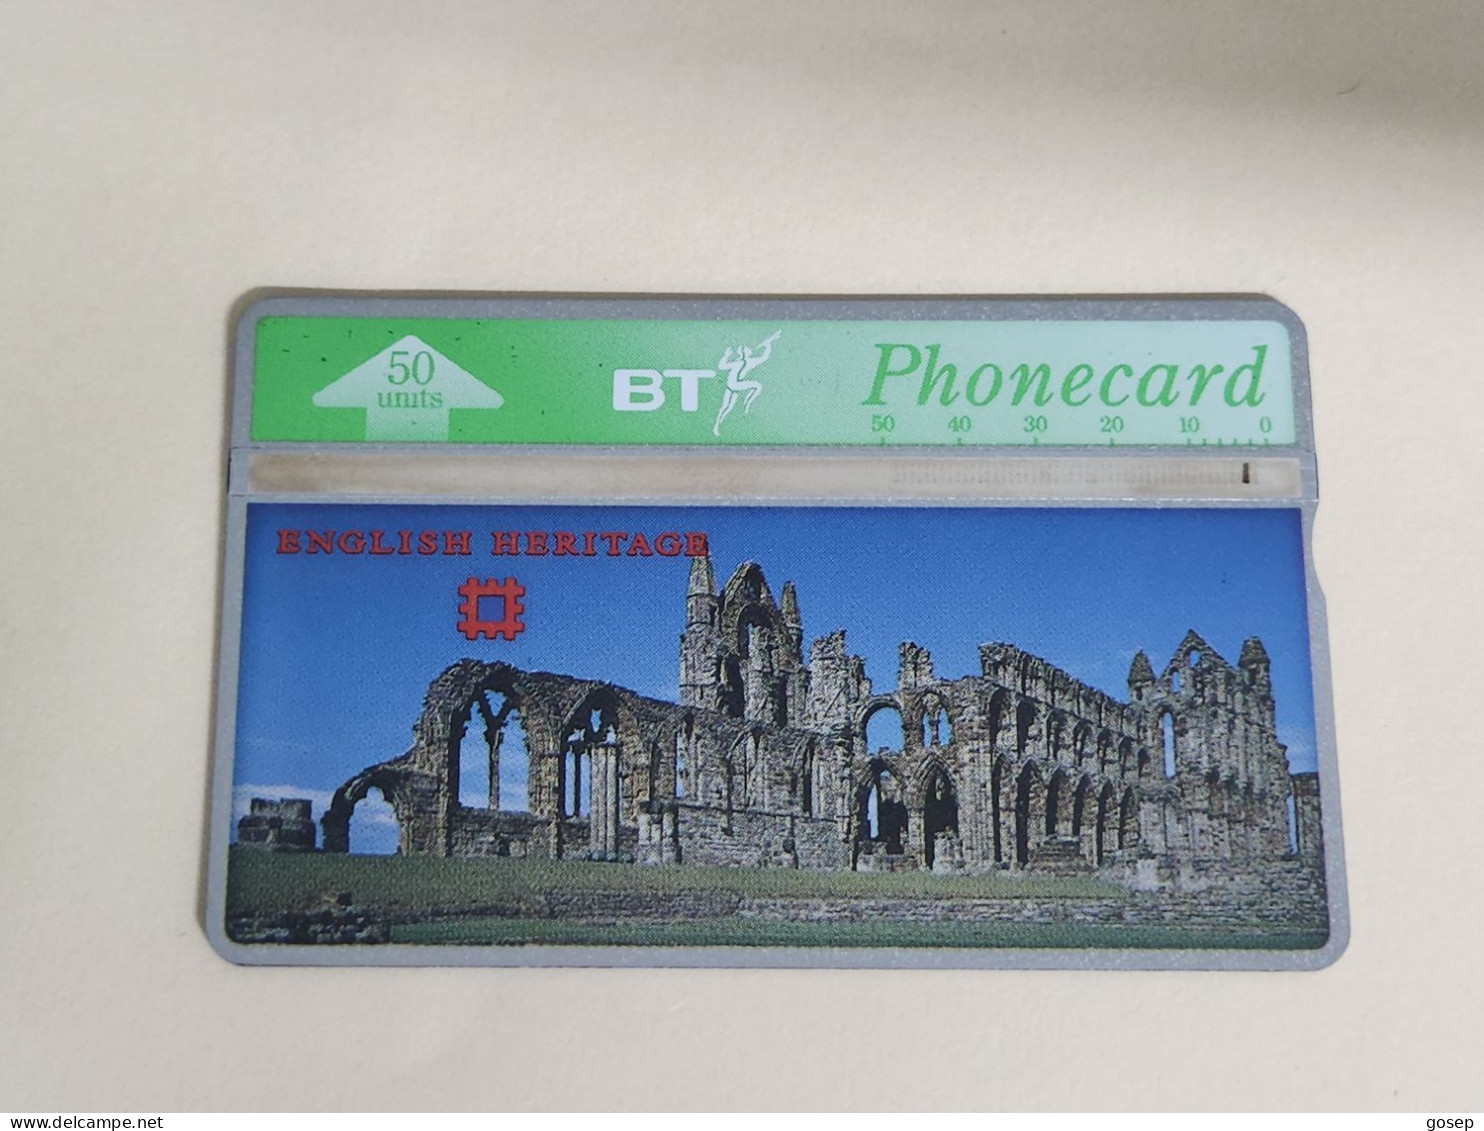 United Kingdom-(BTA112)-HERITAGE-Whitby Abbey-(192)(50units)(547A70177)price Cataloge3.00£-used+1card Prepiad Free - BT Werbezwecke